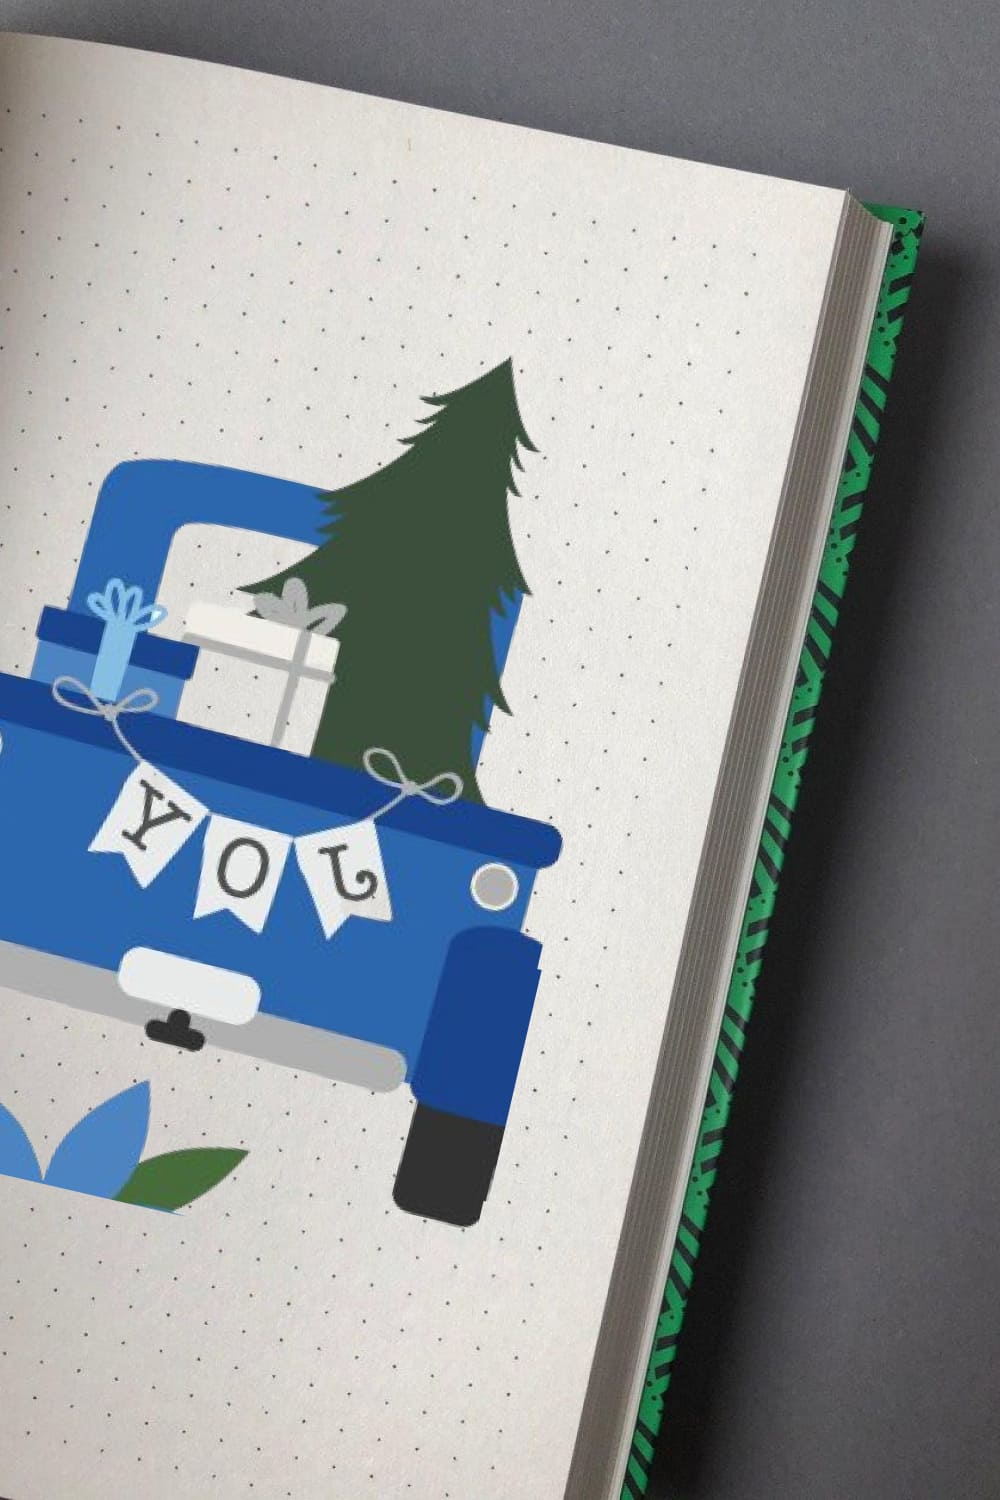 Blue Christmas Truck Clipart + SVG.